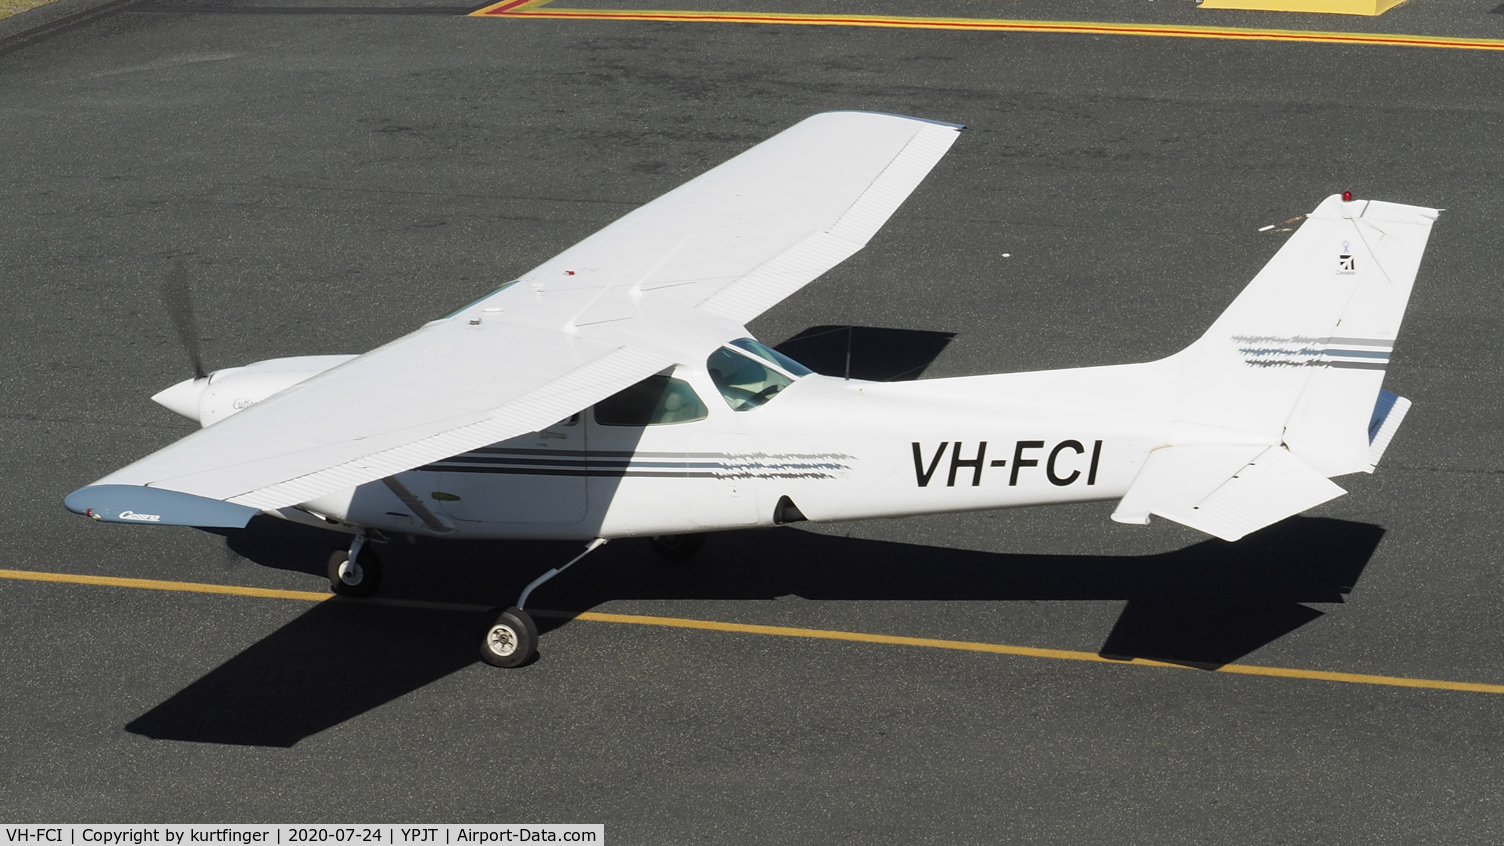 VH-FCI, 1981 Cessna 172RG Cutlass RG C/N 172RG0940, Cessna 172RG msn 172RG0940. Police Aero Club VH-FCI YPJT 24th July 2020.